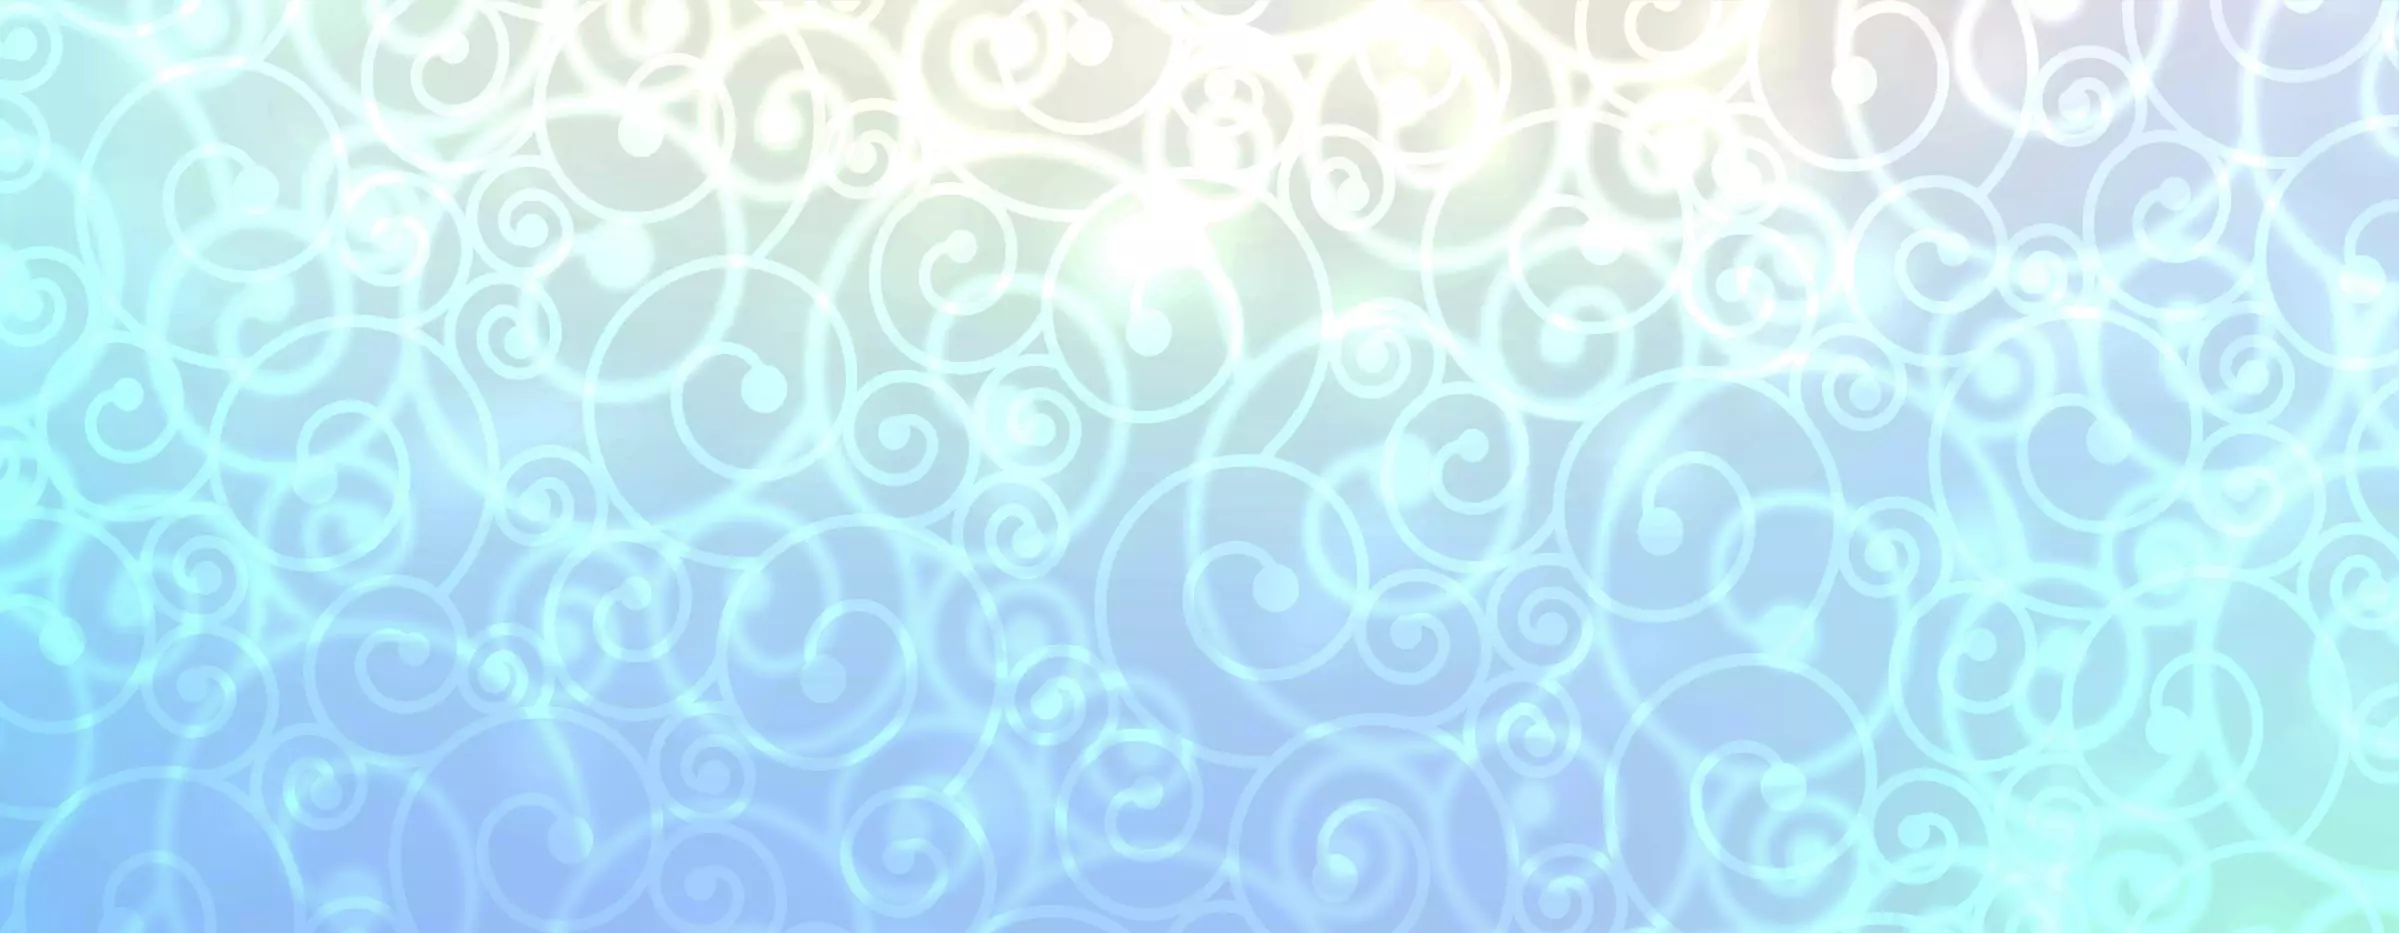 swirled background